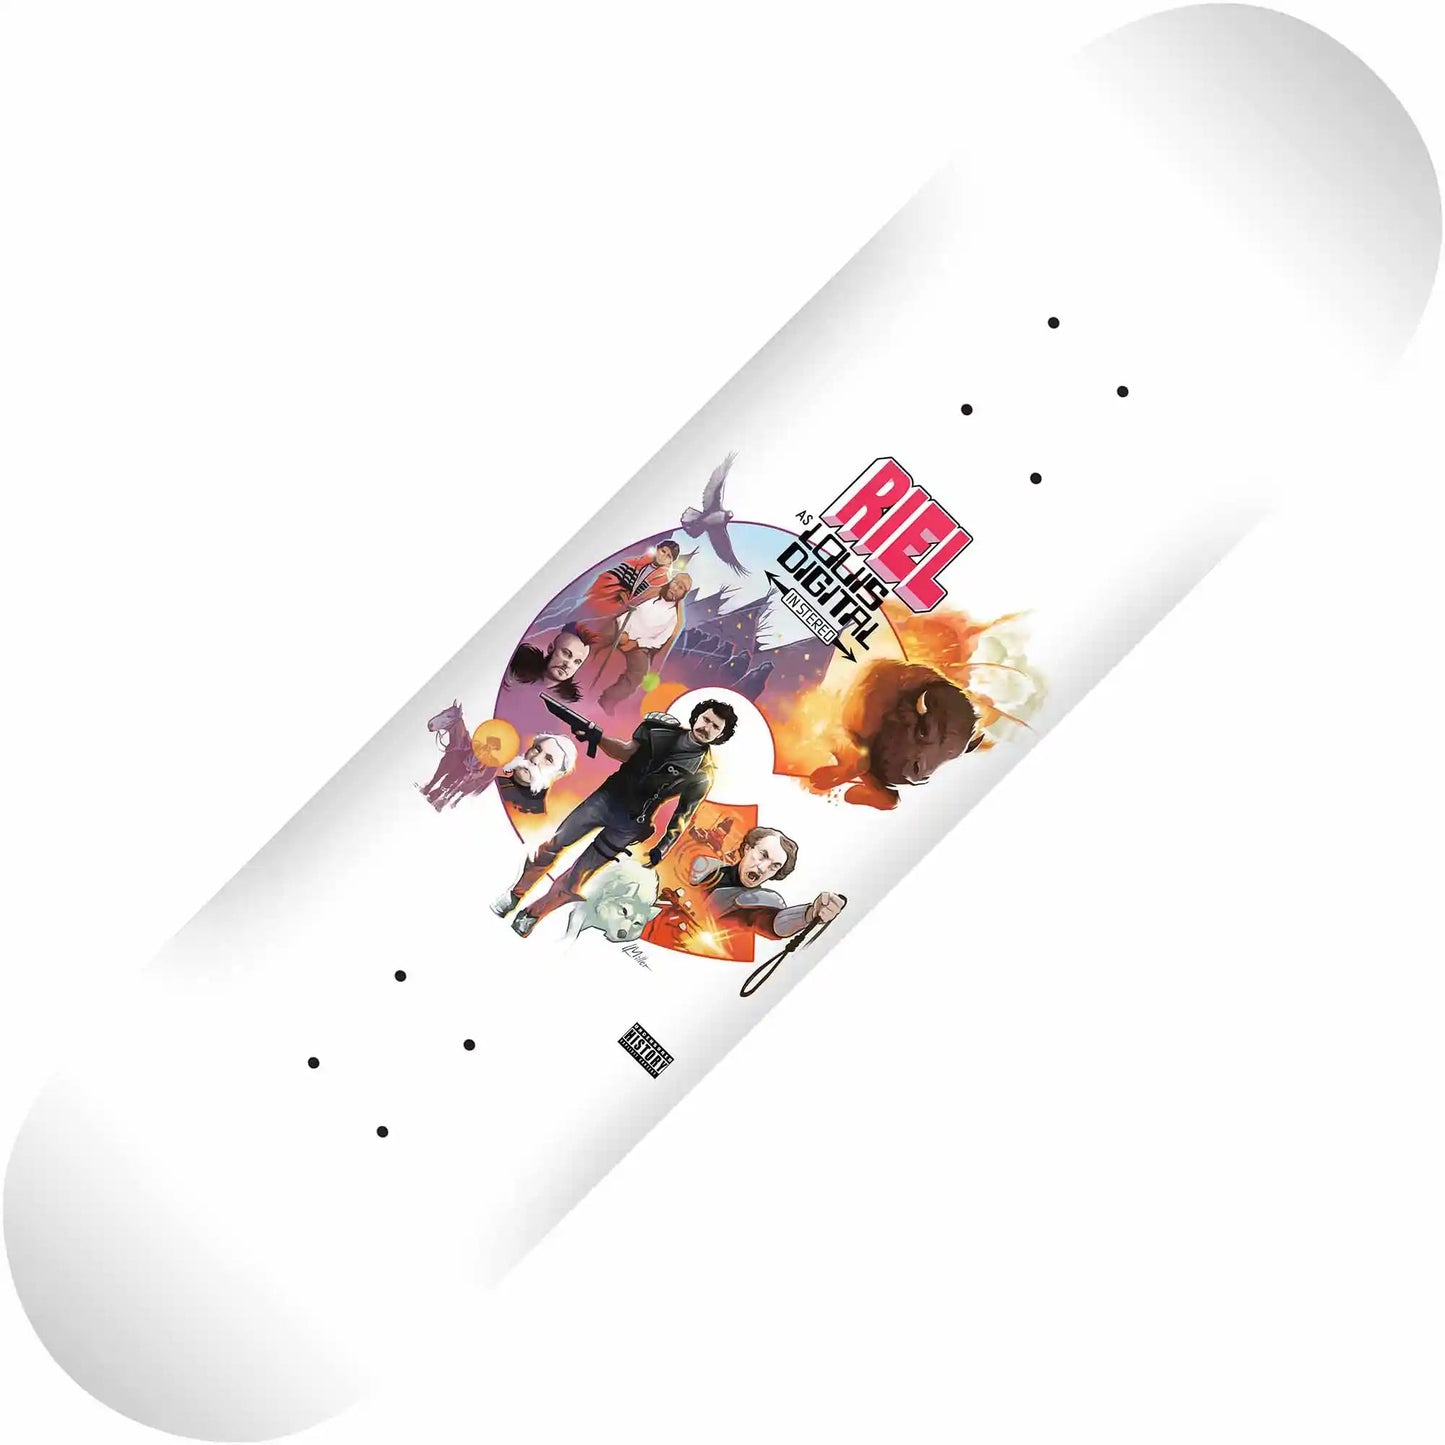 Colonialism Louis Digital Reissue Deck (White) (8.25") - Tiki Room Skateboards - 1